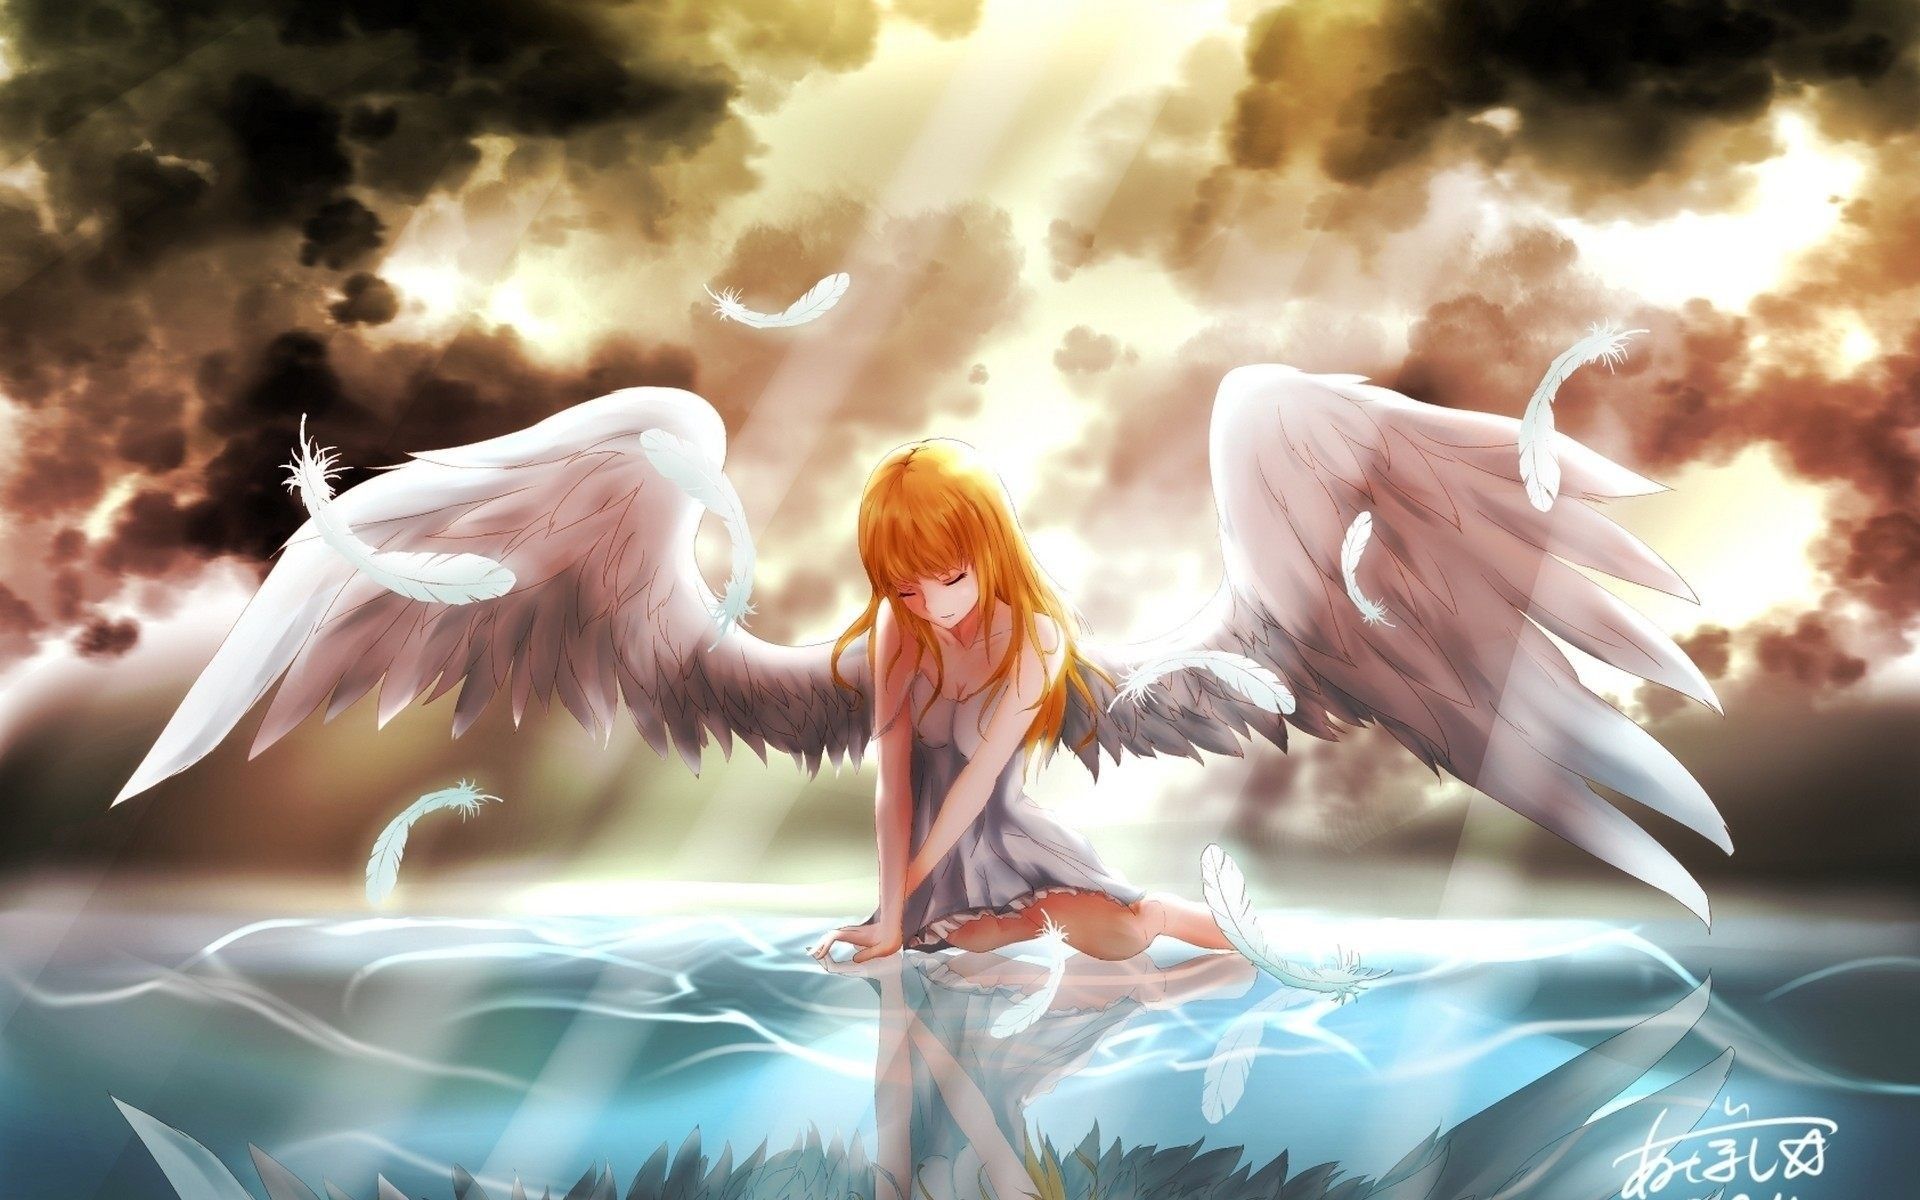 anime fallen angel wallpaper | Anime fallen angel, Angel wallpaper, Anime